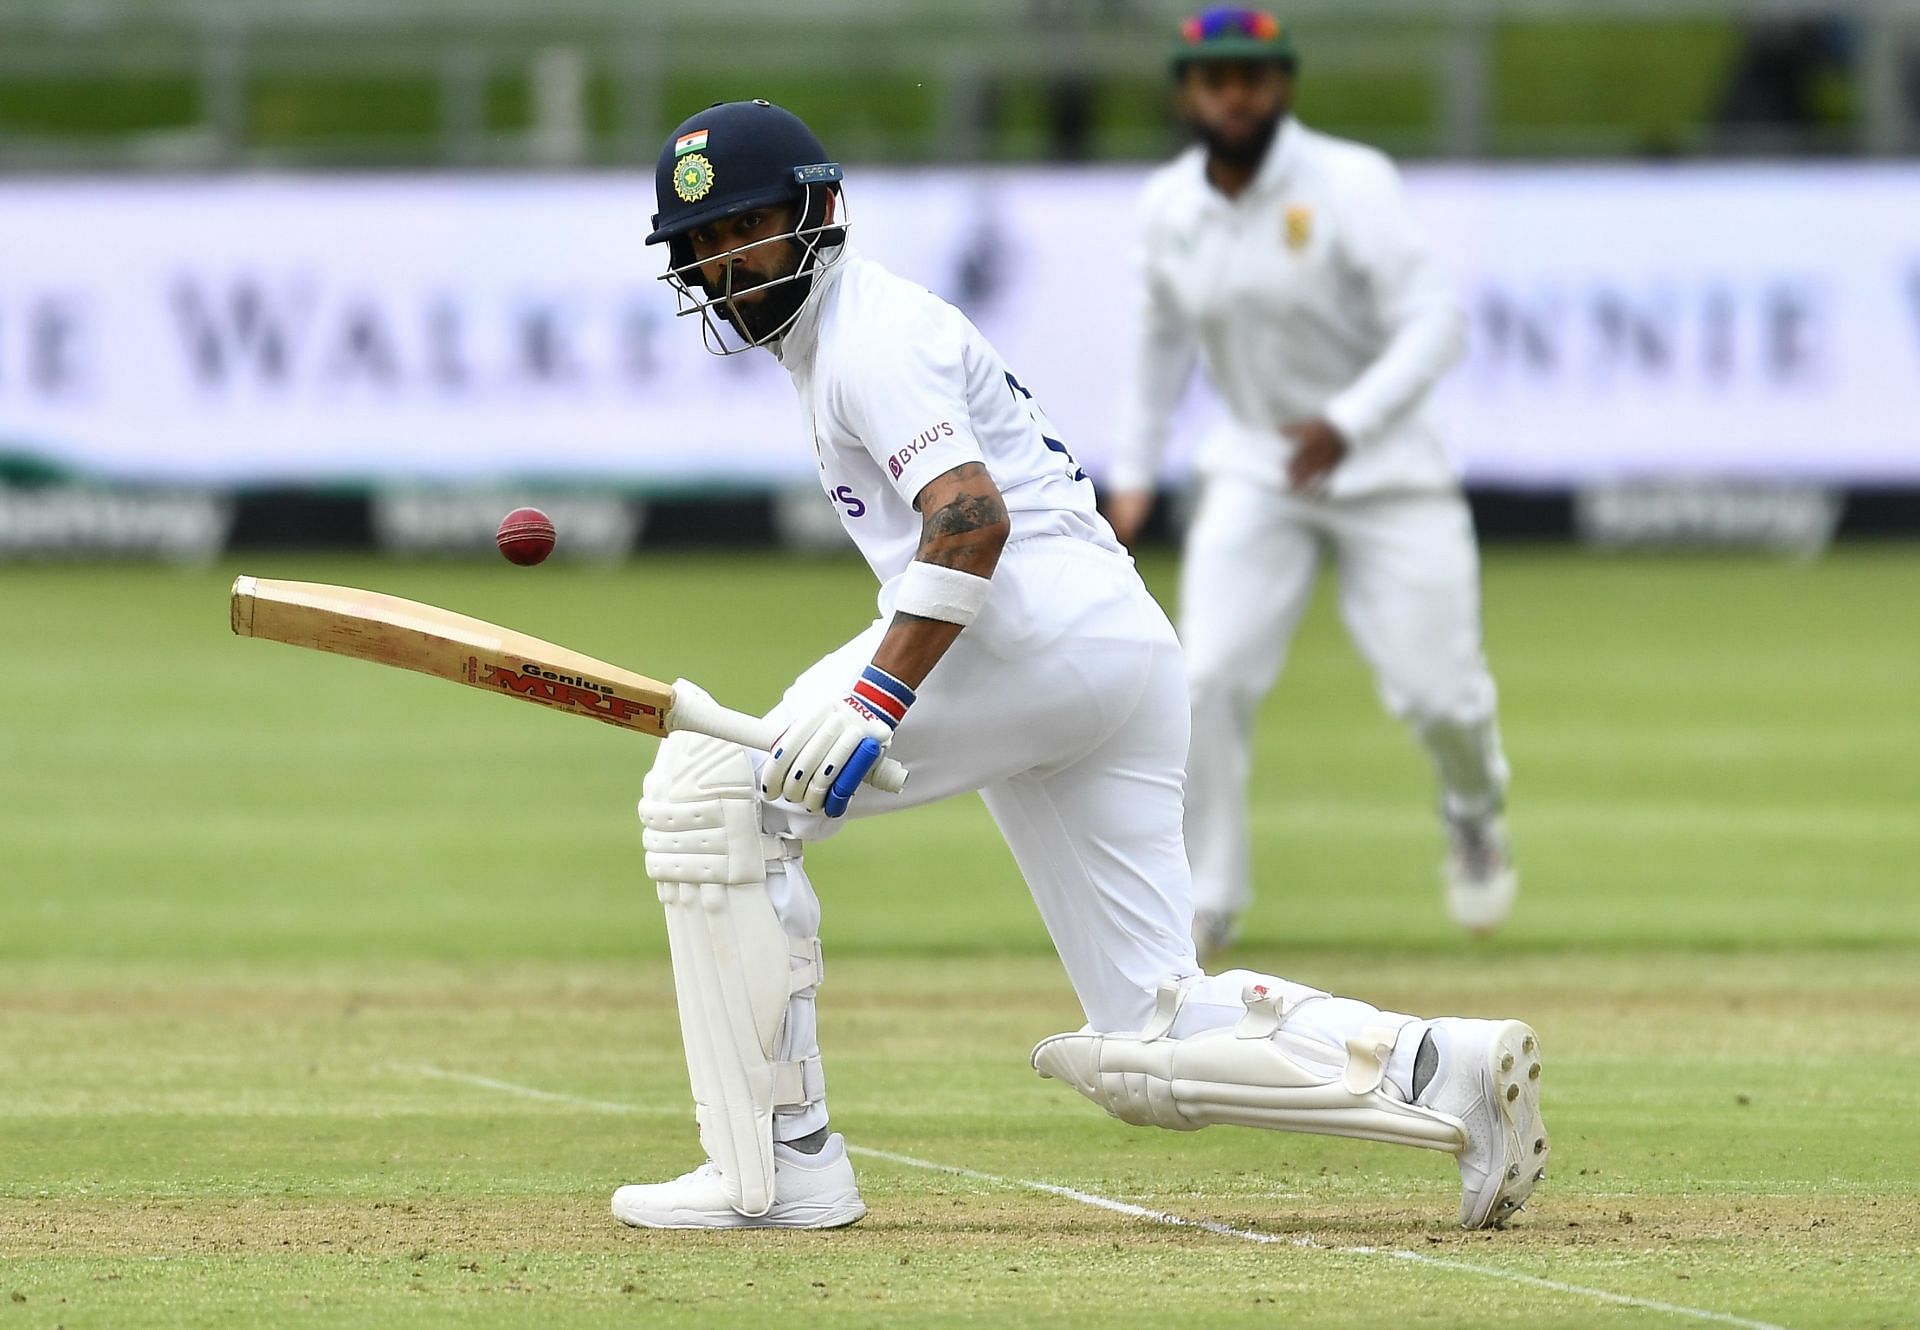 Virat Kohli is set to play his 100th Test when India take on Sri Lanka in Mohali